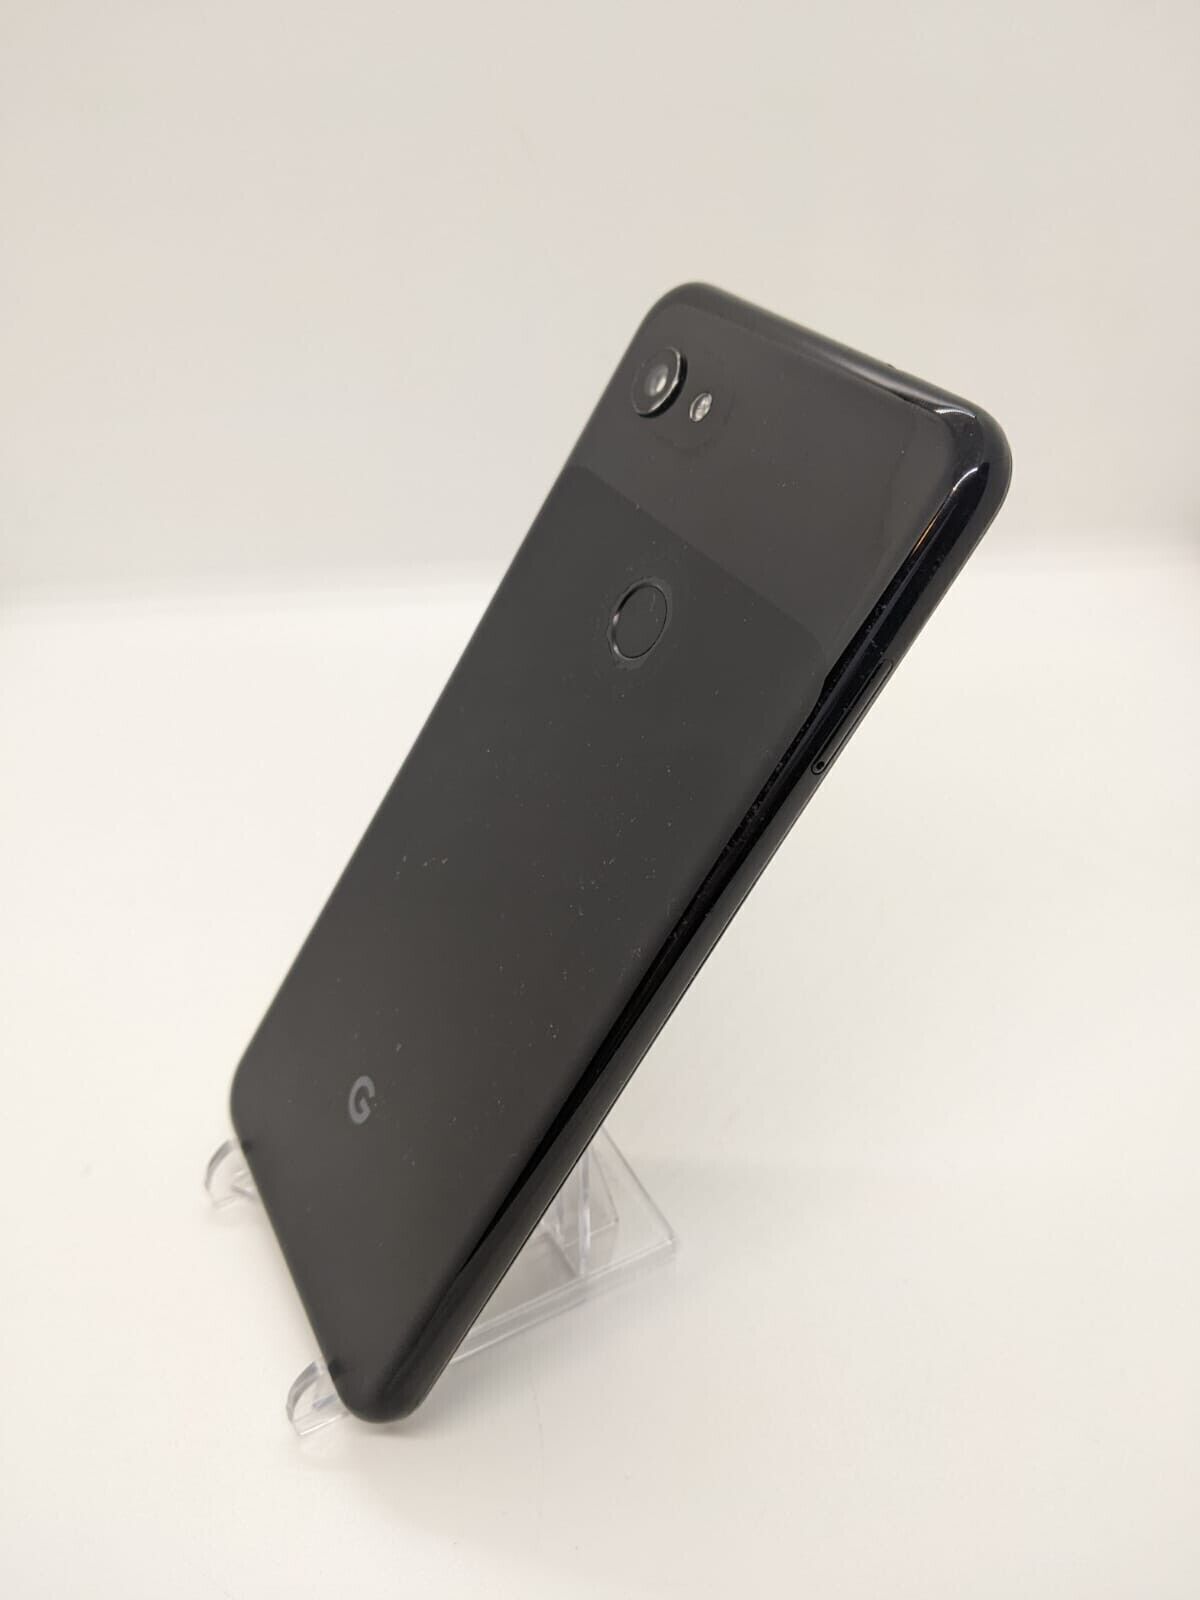 Google Pixel 3a XL 64GB Unlocked 4G LTE Smartphone G020A